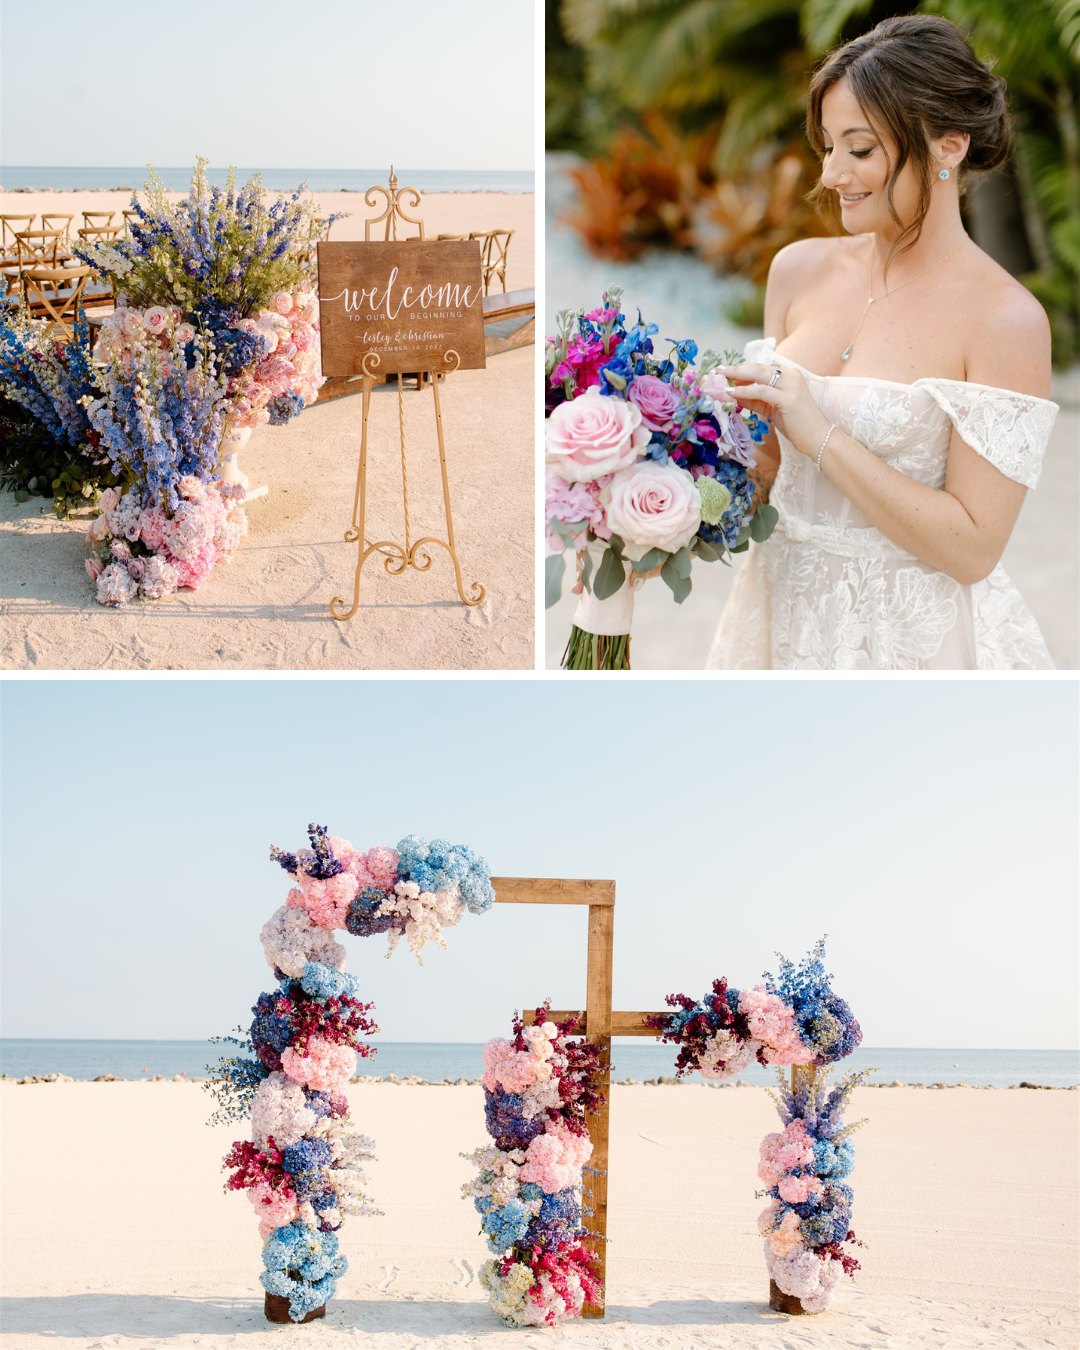 Floral wedding arch at a beach.